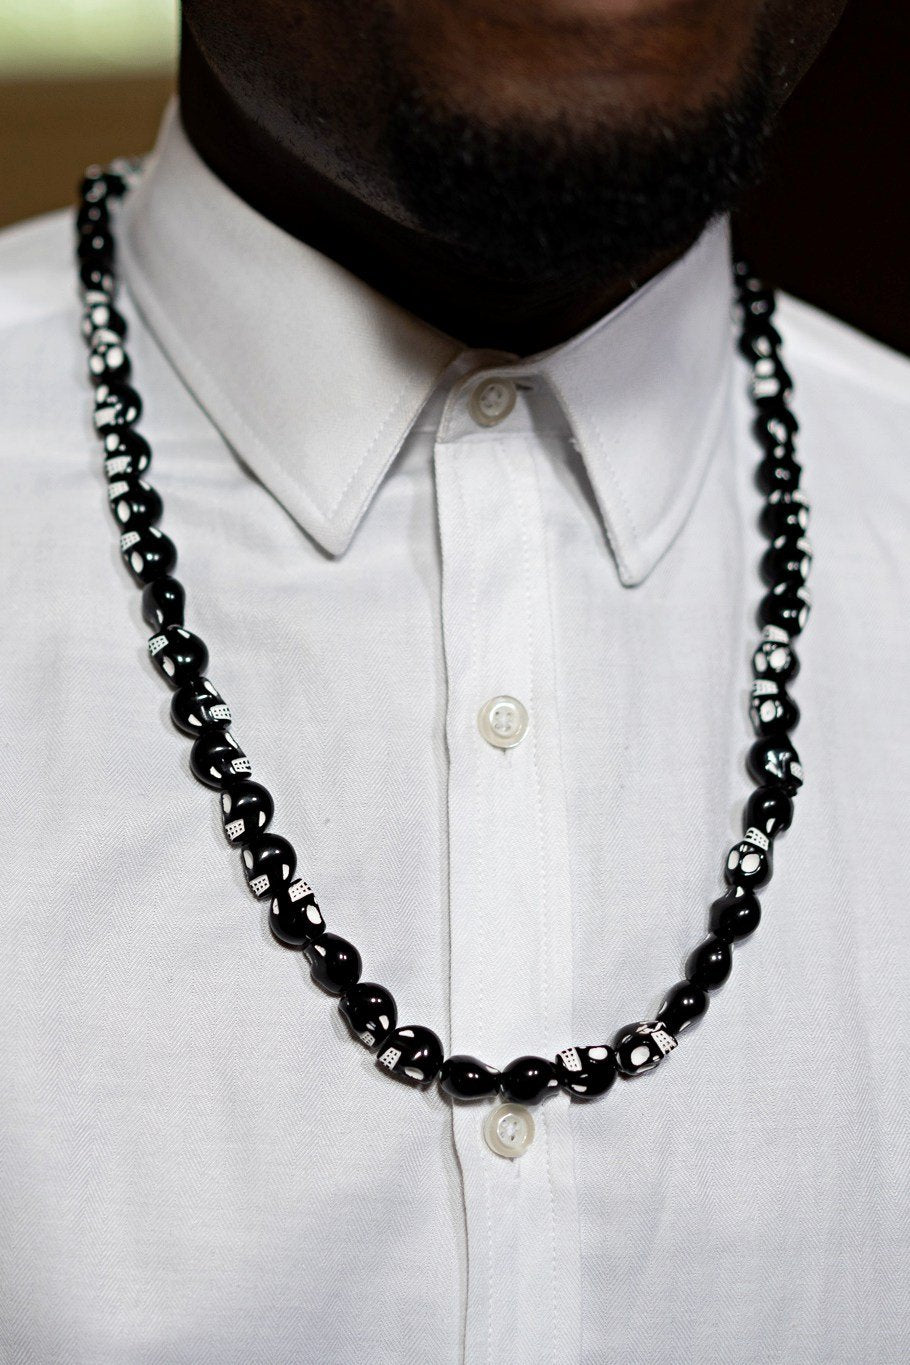 Beige Skull Beads Necklace for Men